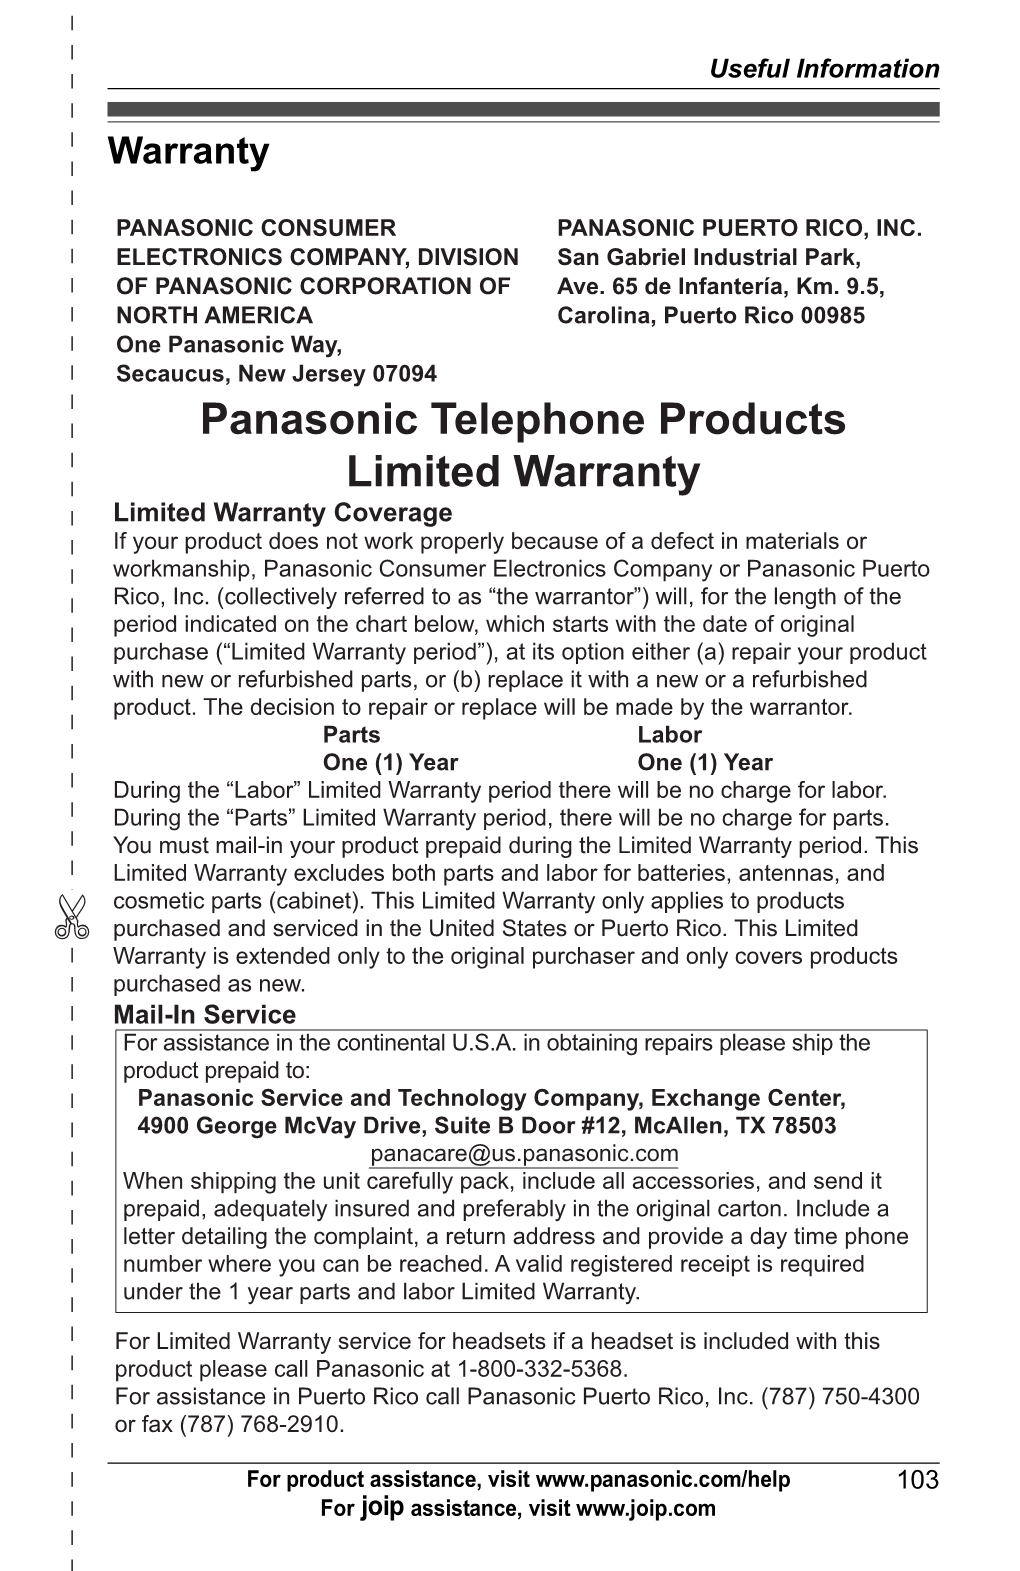 Panasonic Telephone Products Limited Warranty